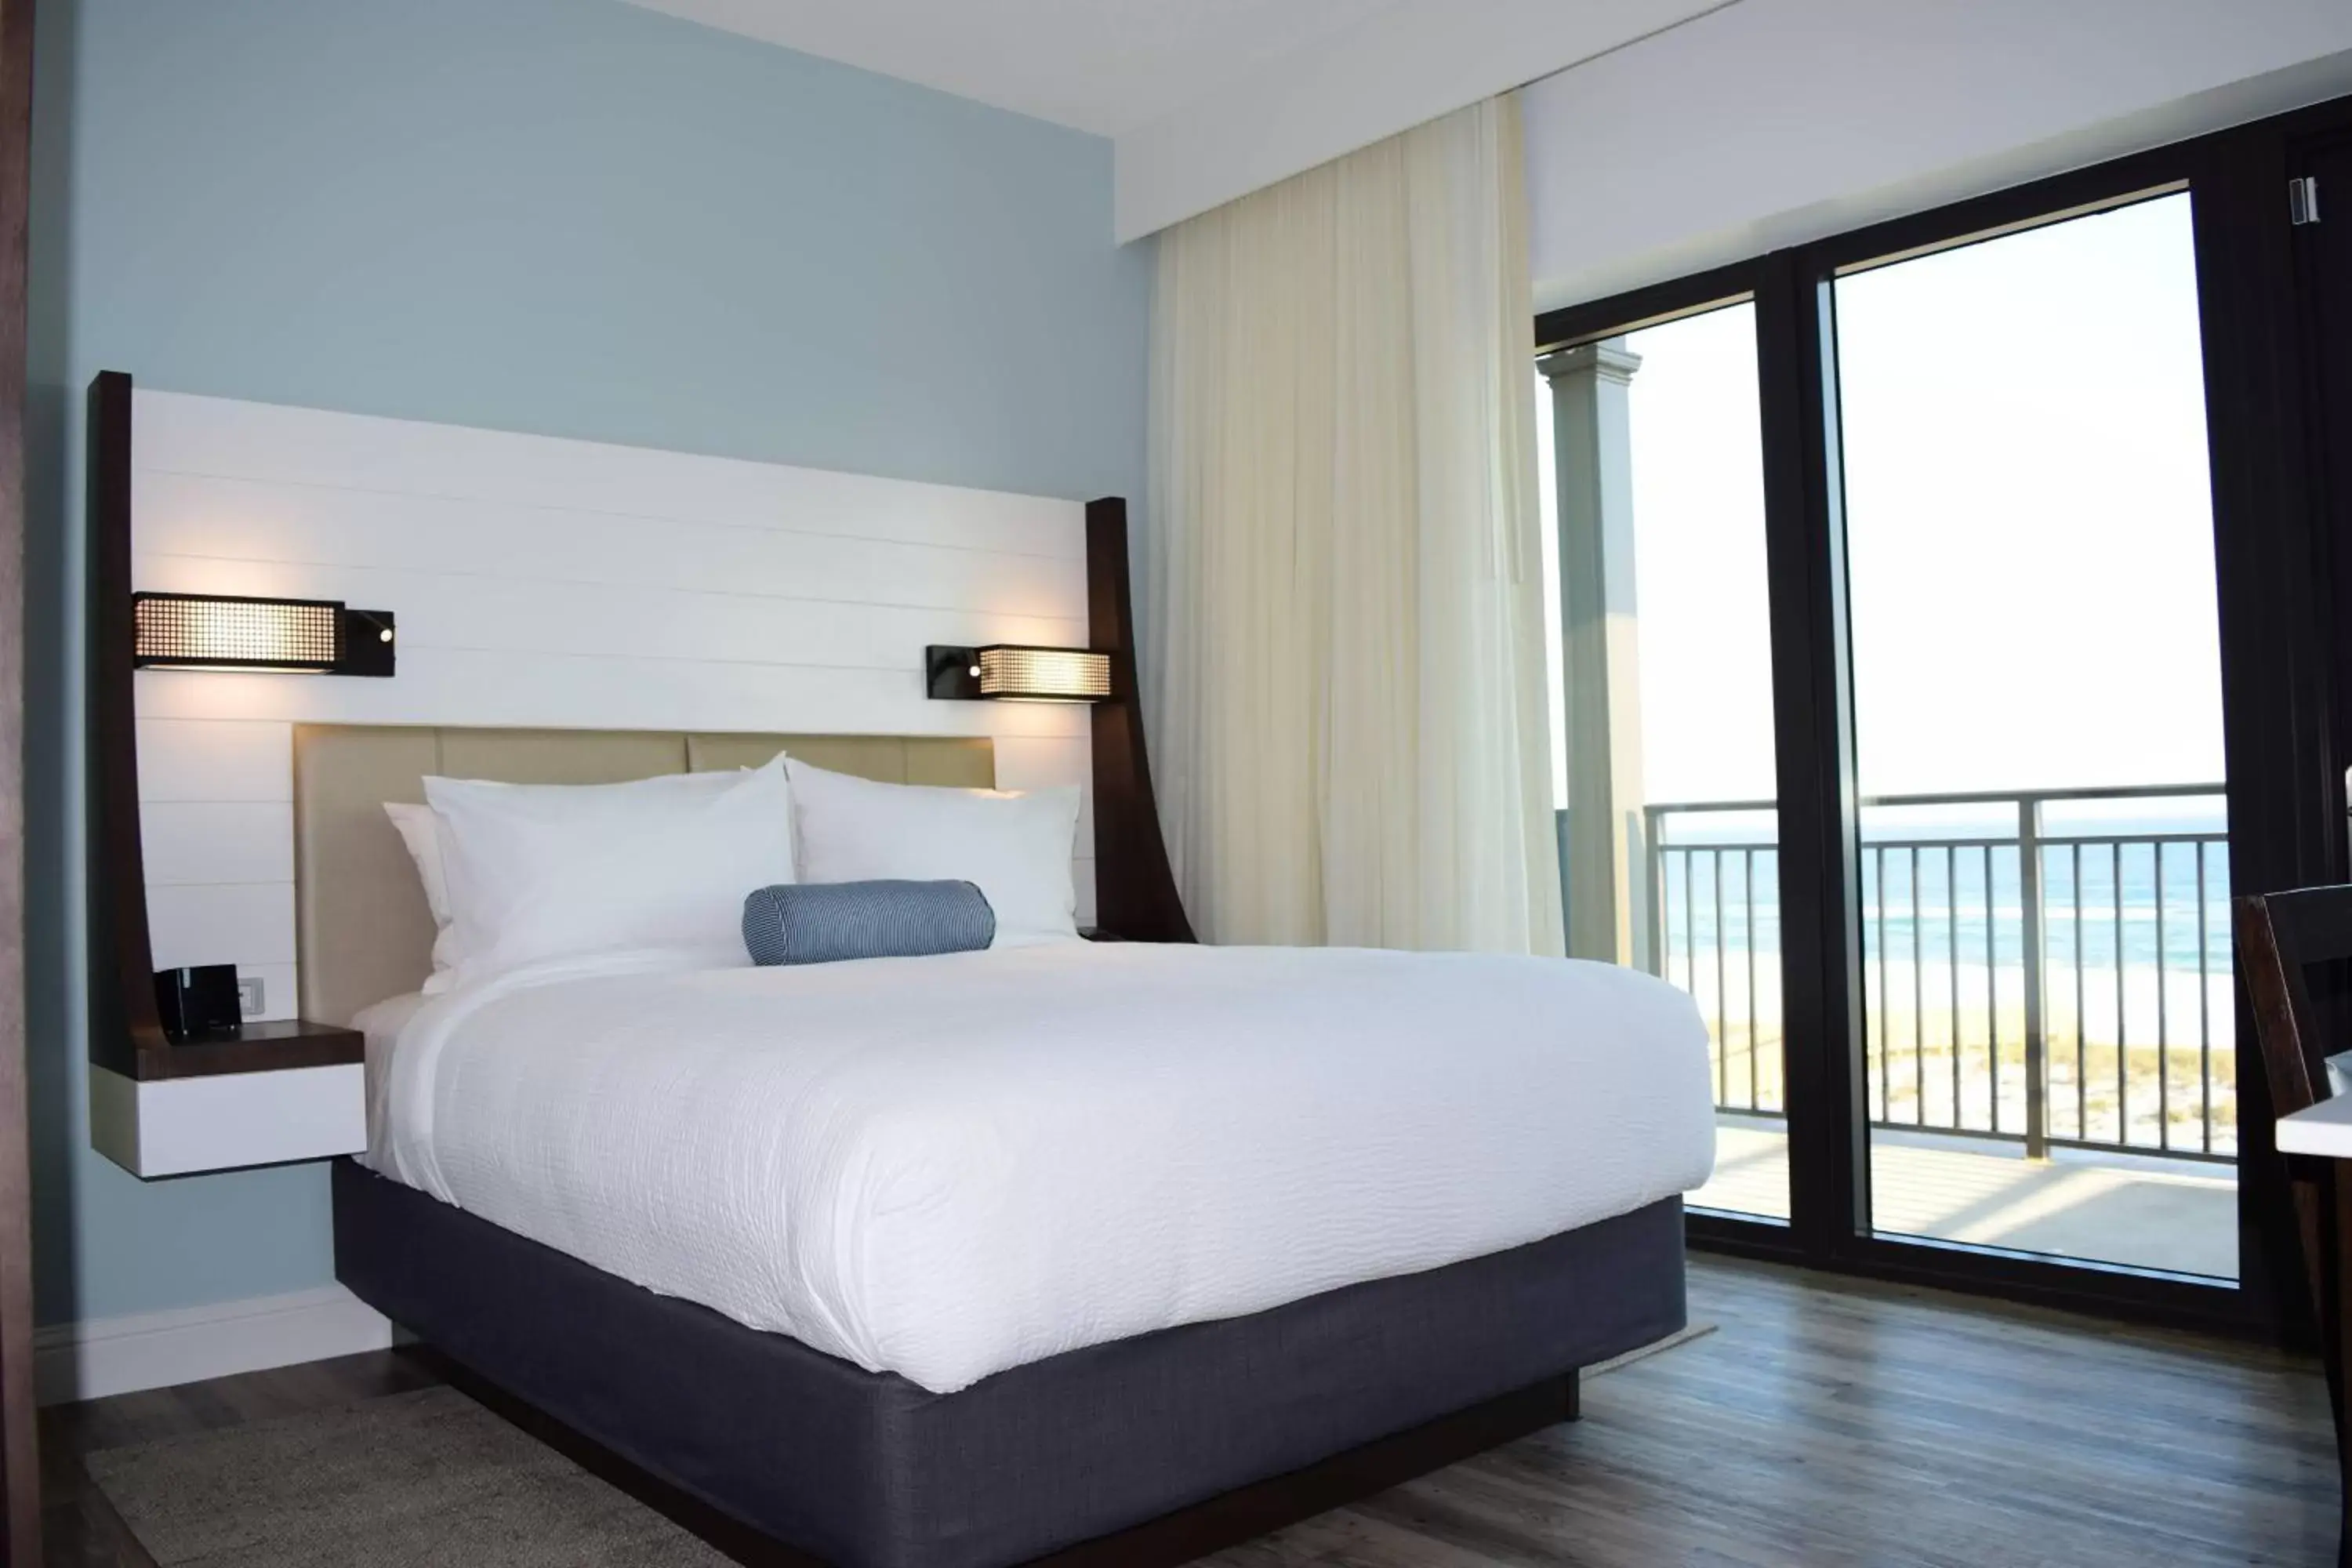 Bedroom, Bed in SpringHill Suites by Marriott Navarre Beach